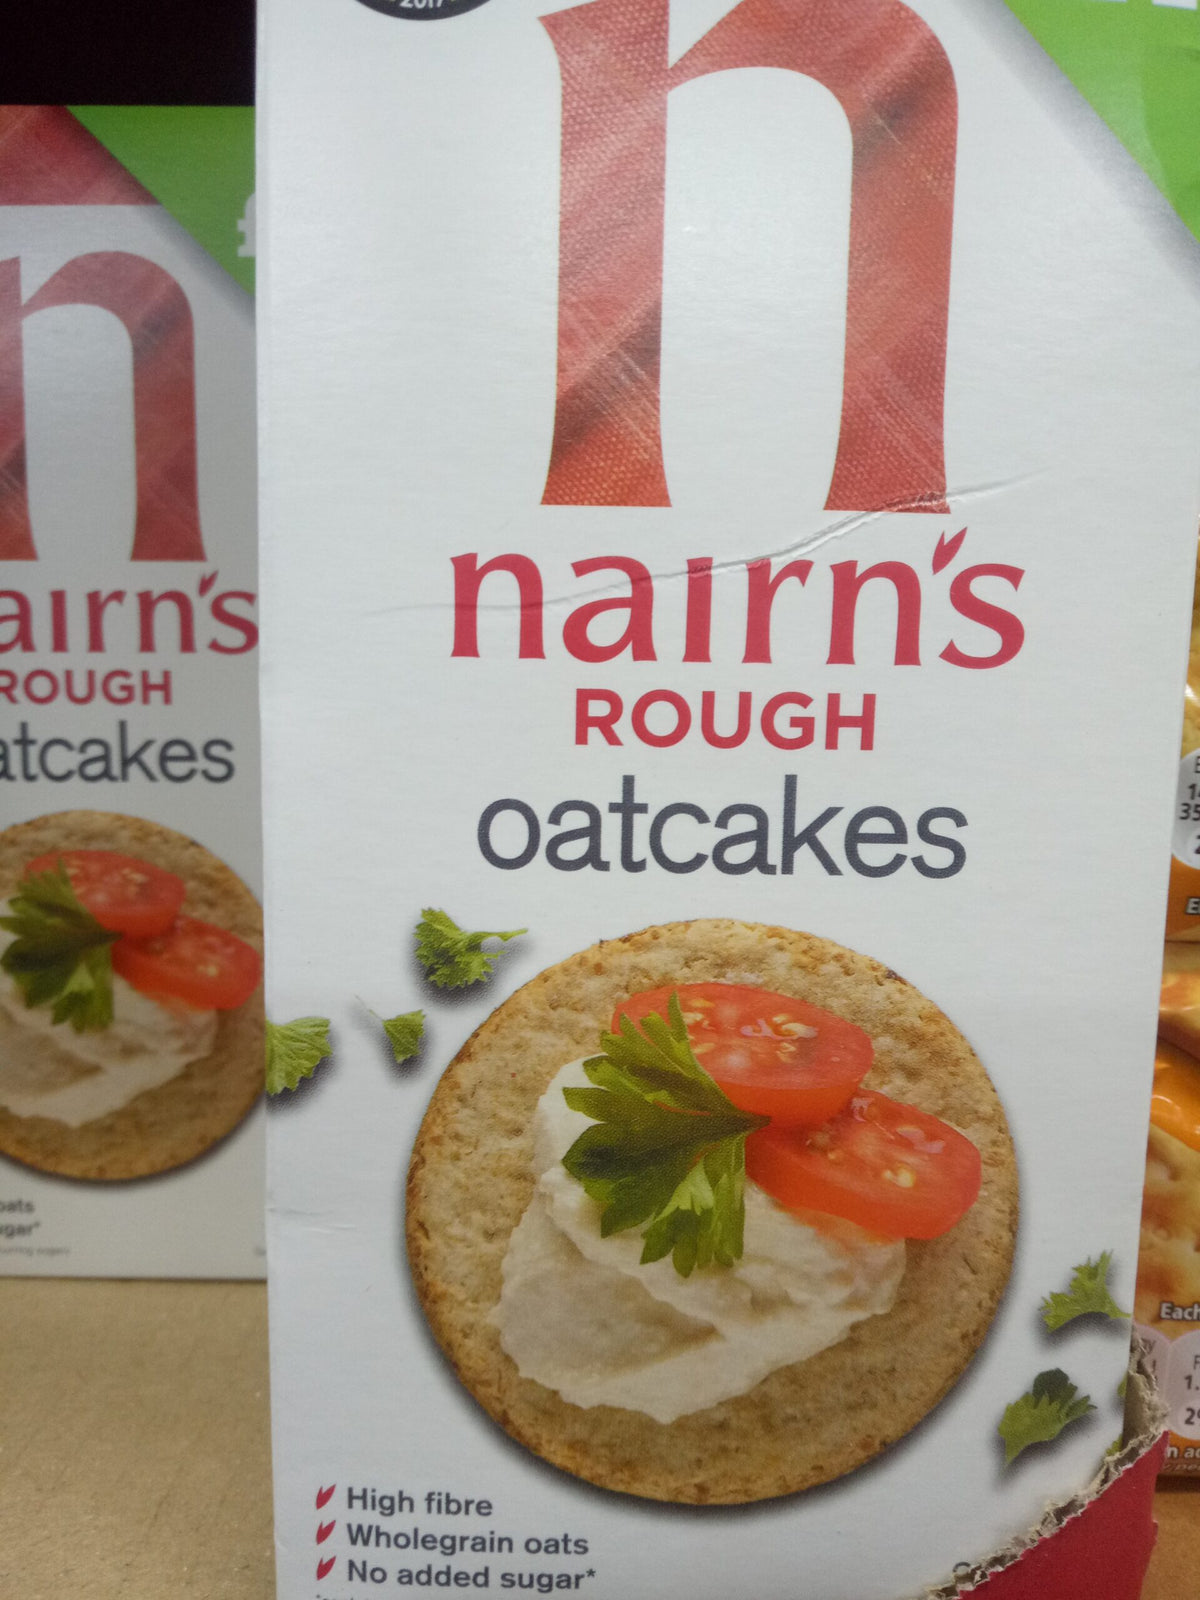 Nairn's rough oatcakes